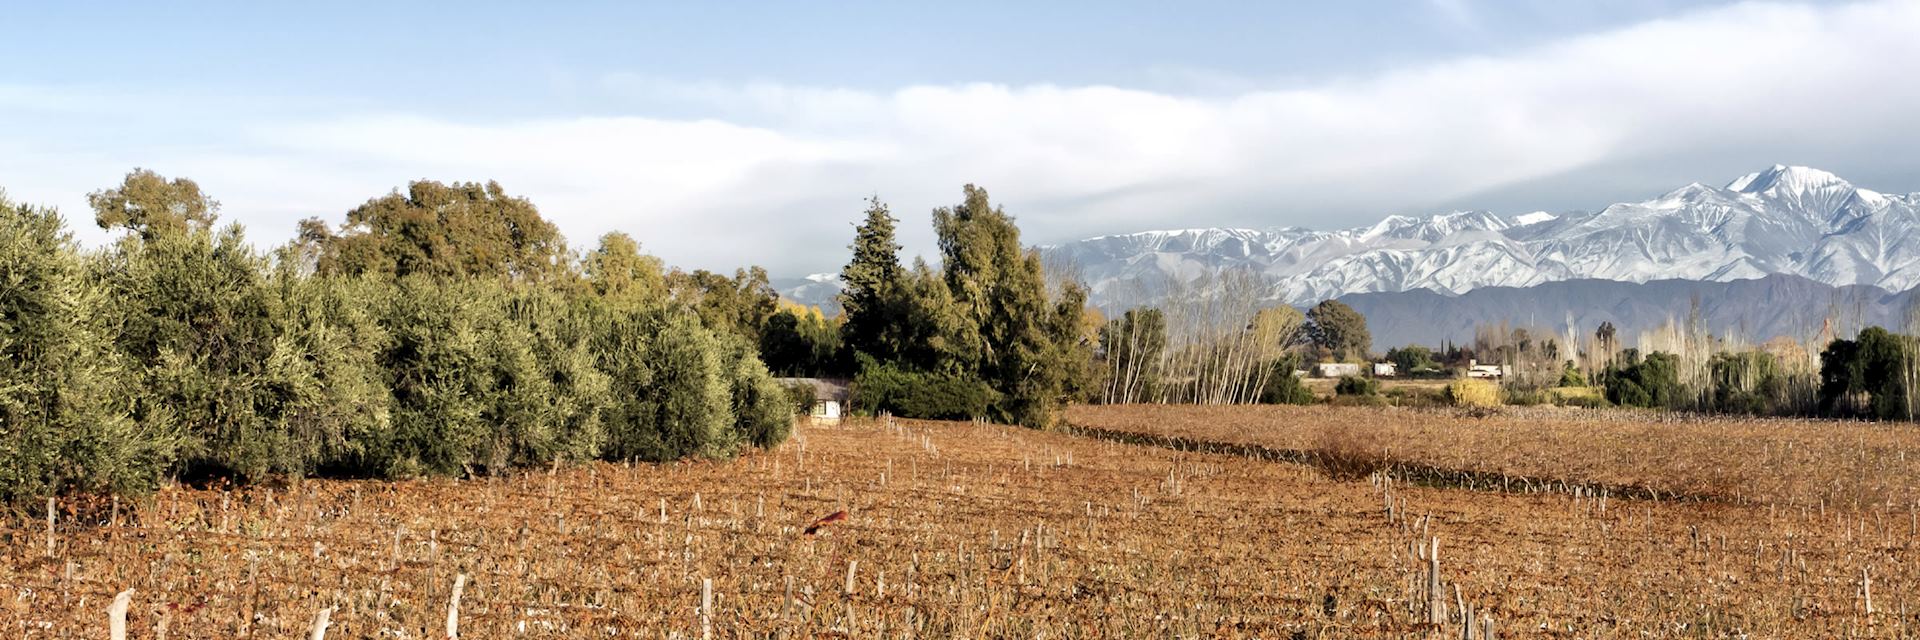 Mendoza Province in Argentina in Autumn